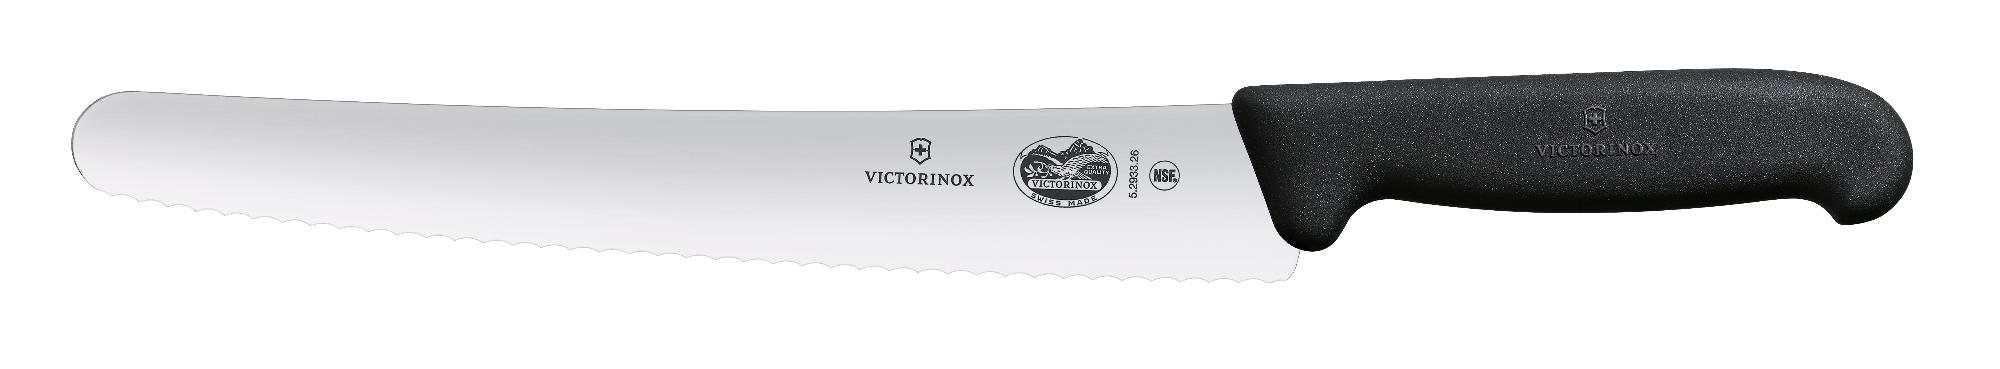 Fibrox confectionery knife, serrated, 26 cm - black